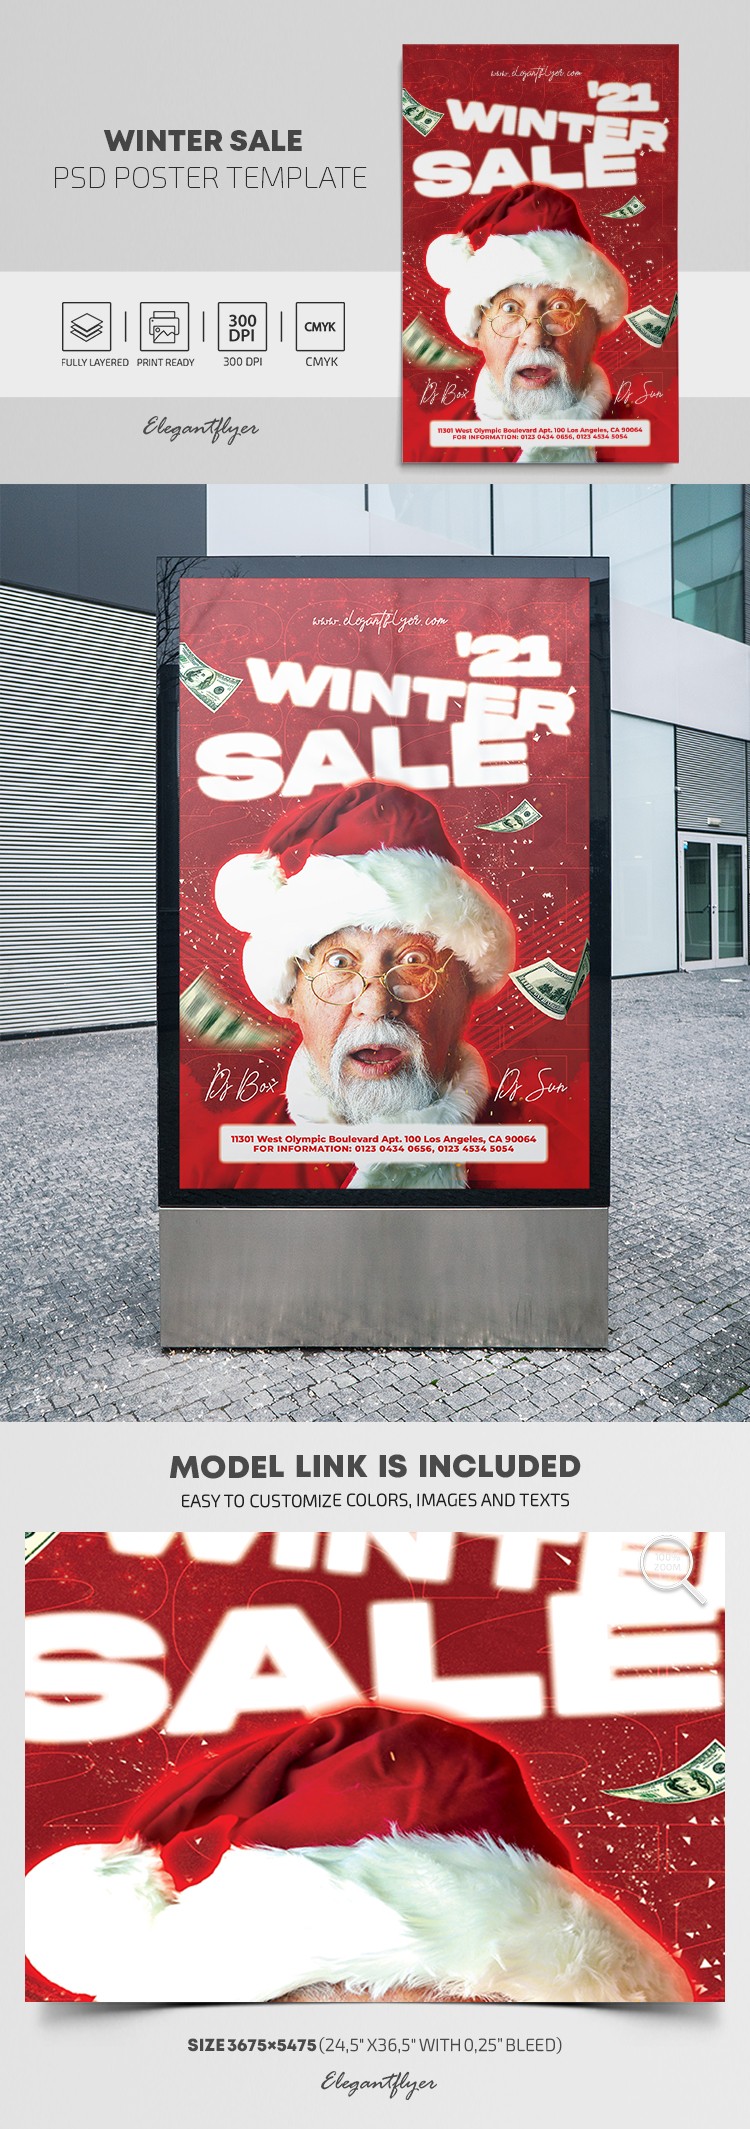 Winter Sale Poster by ElegantFlyer